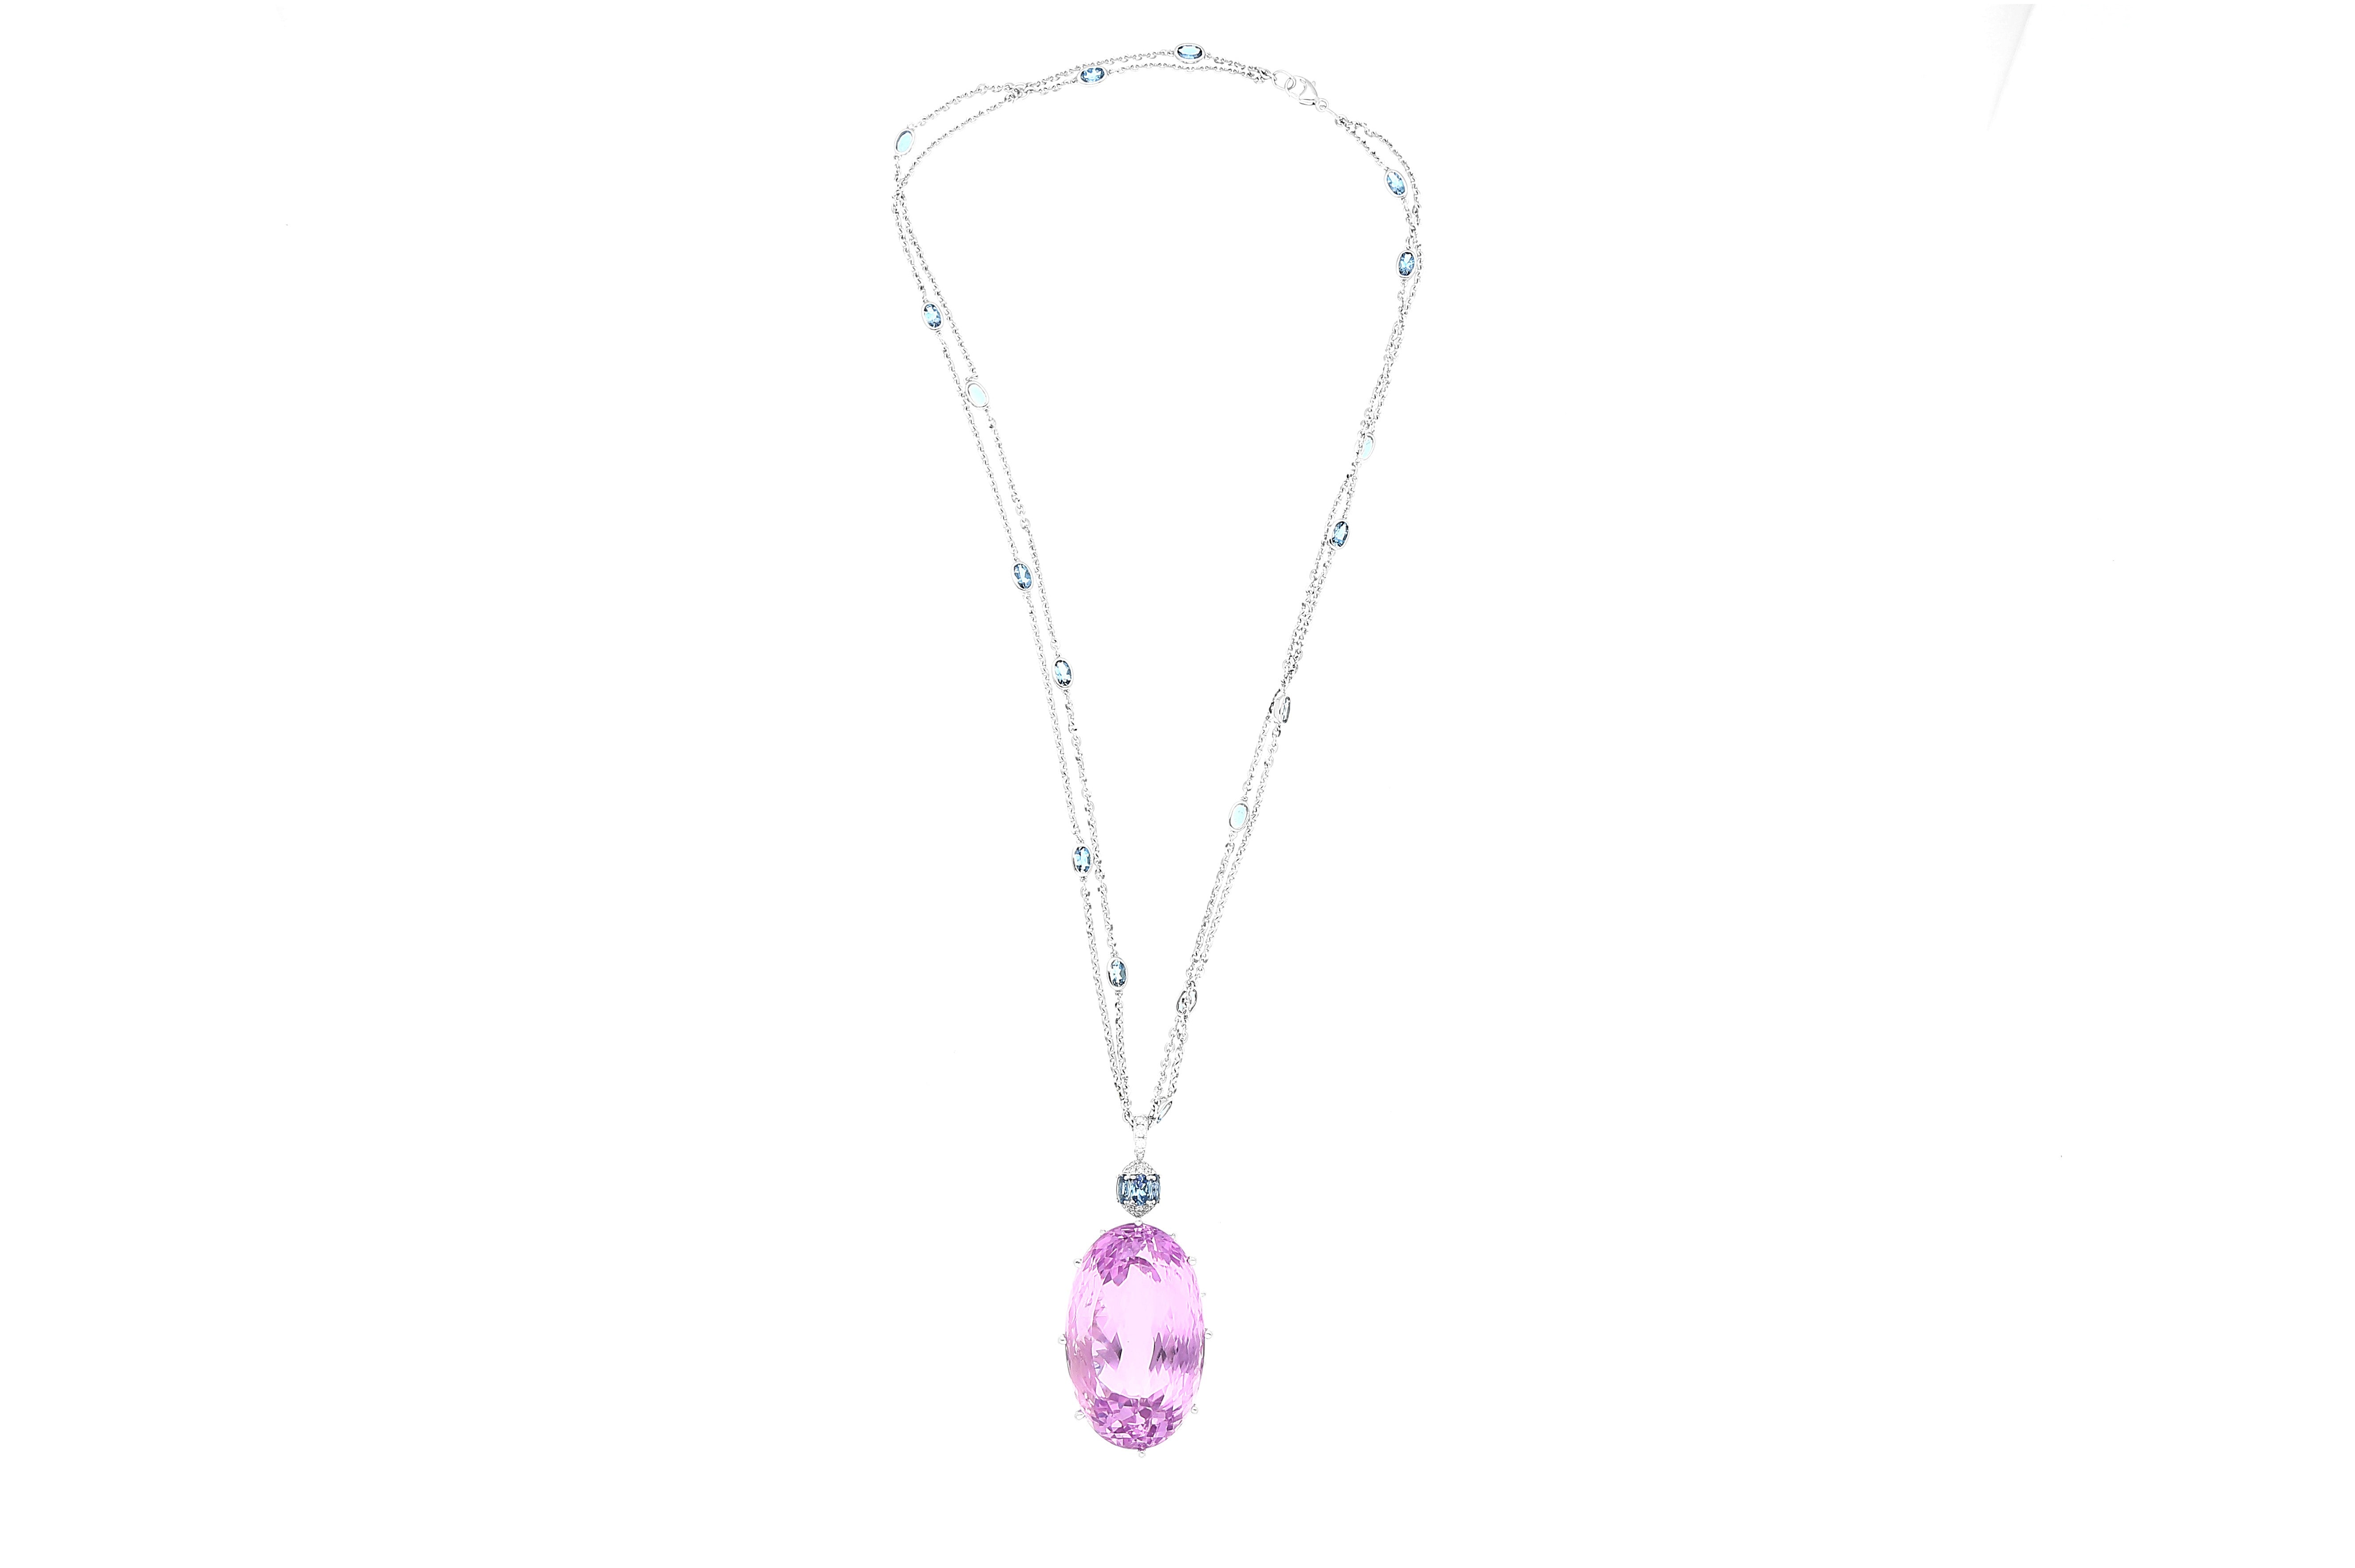 100-Carat-Oval-Cut-Pink-Kunzite-with-Aquamarine-Diamond-Side-Stone-Pendant-in-18K-White-Gold-Semi-Precious-Jewelry-2.jpg